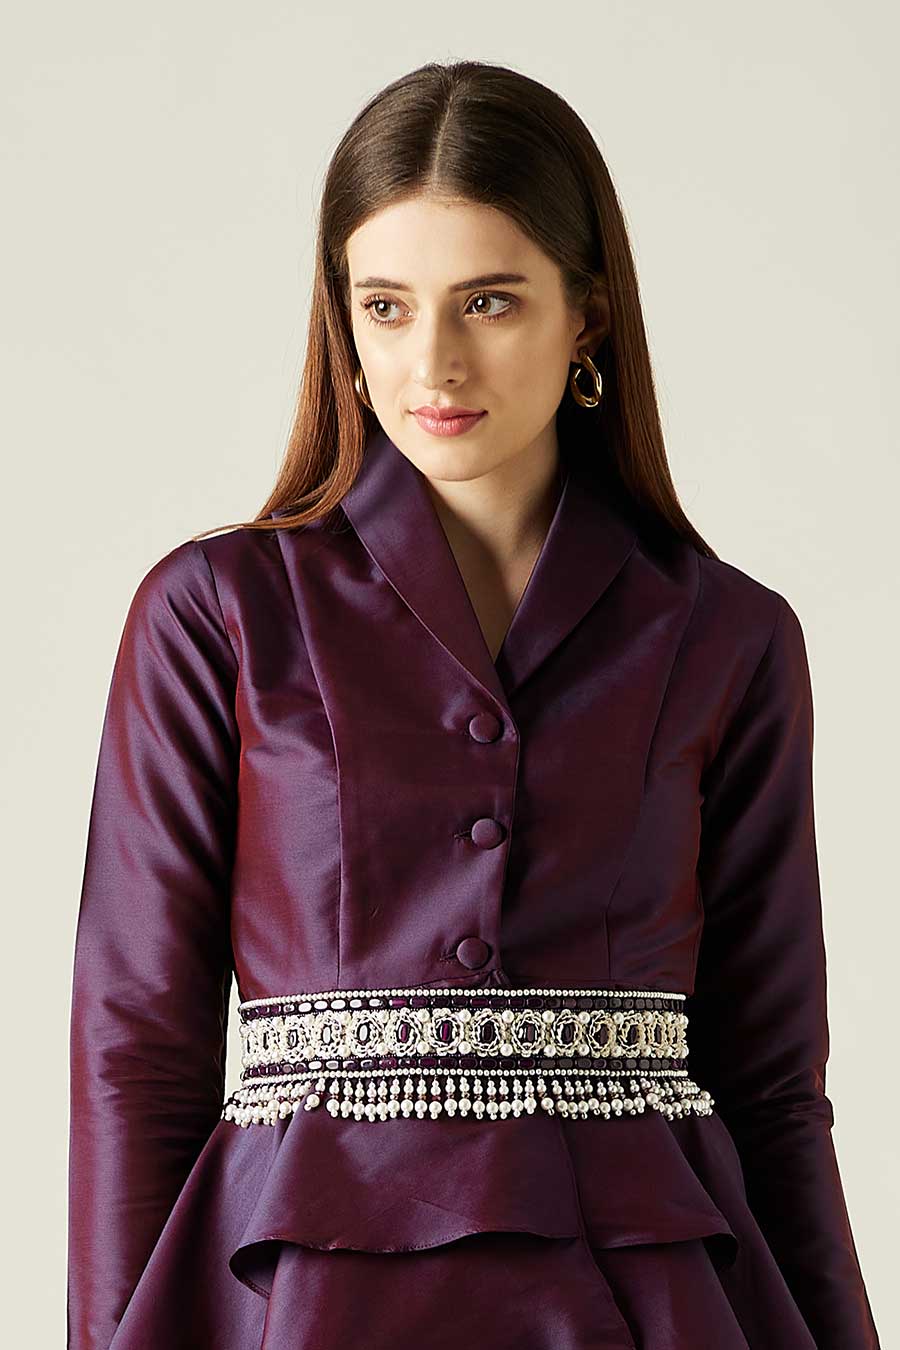 Purple Bead & Pearl Hand Embroidered Belt